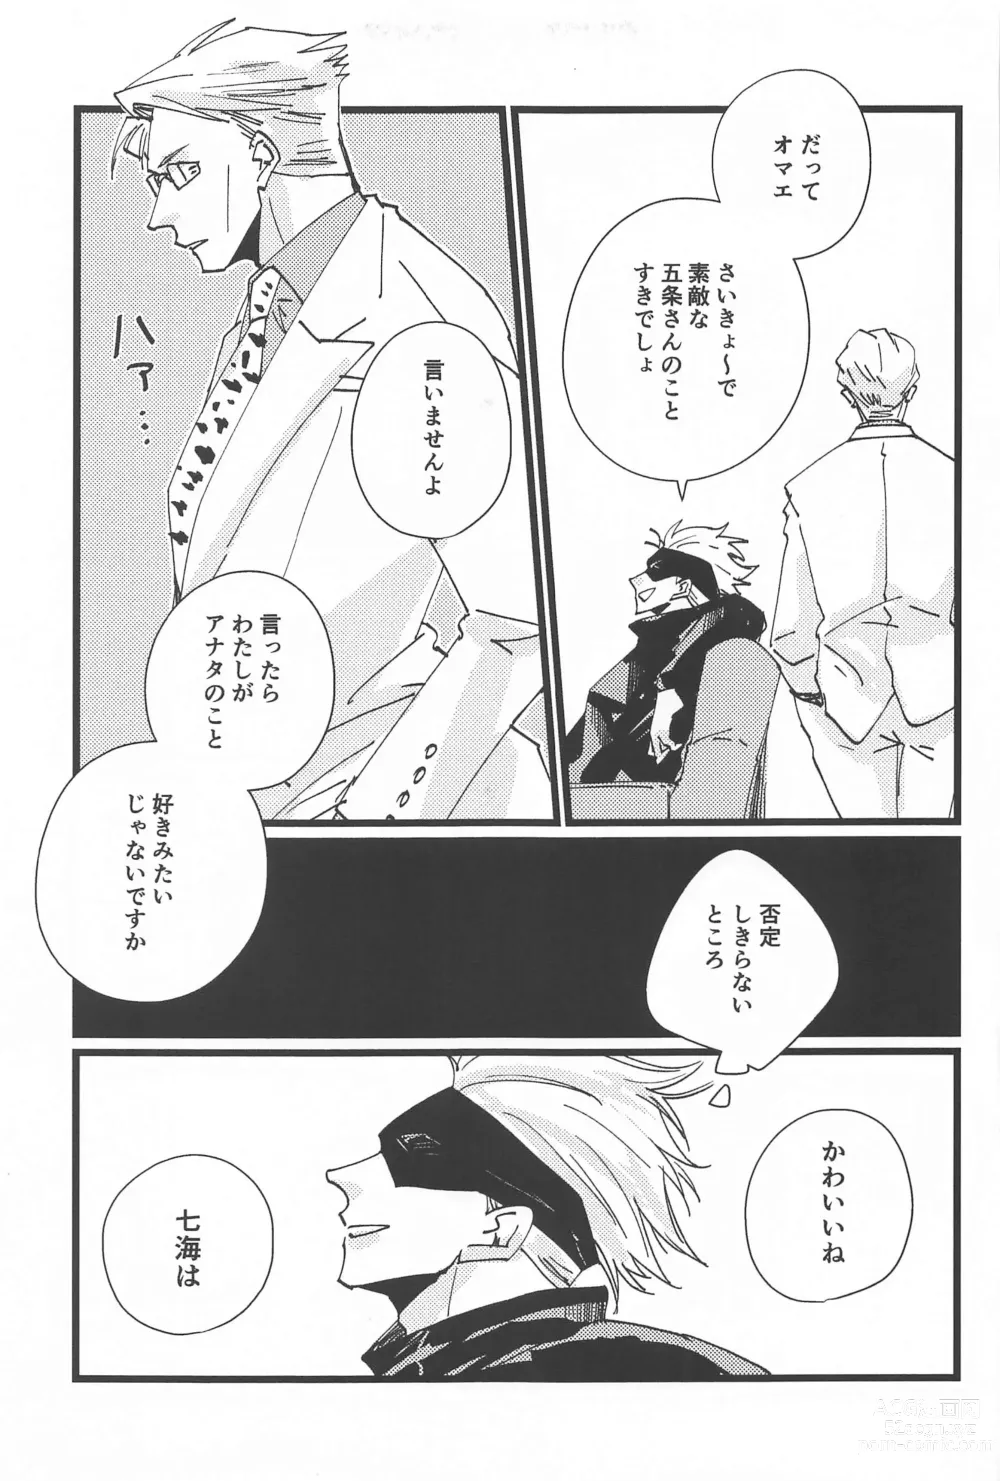 Page 18 of doujinshi timeless memory 2